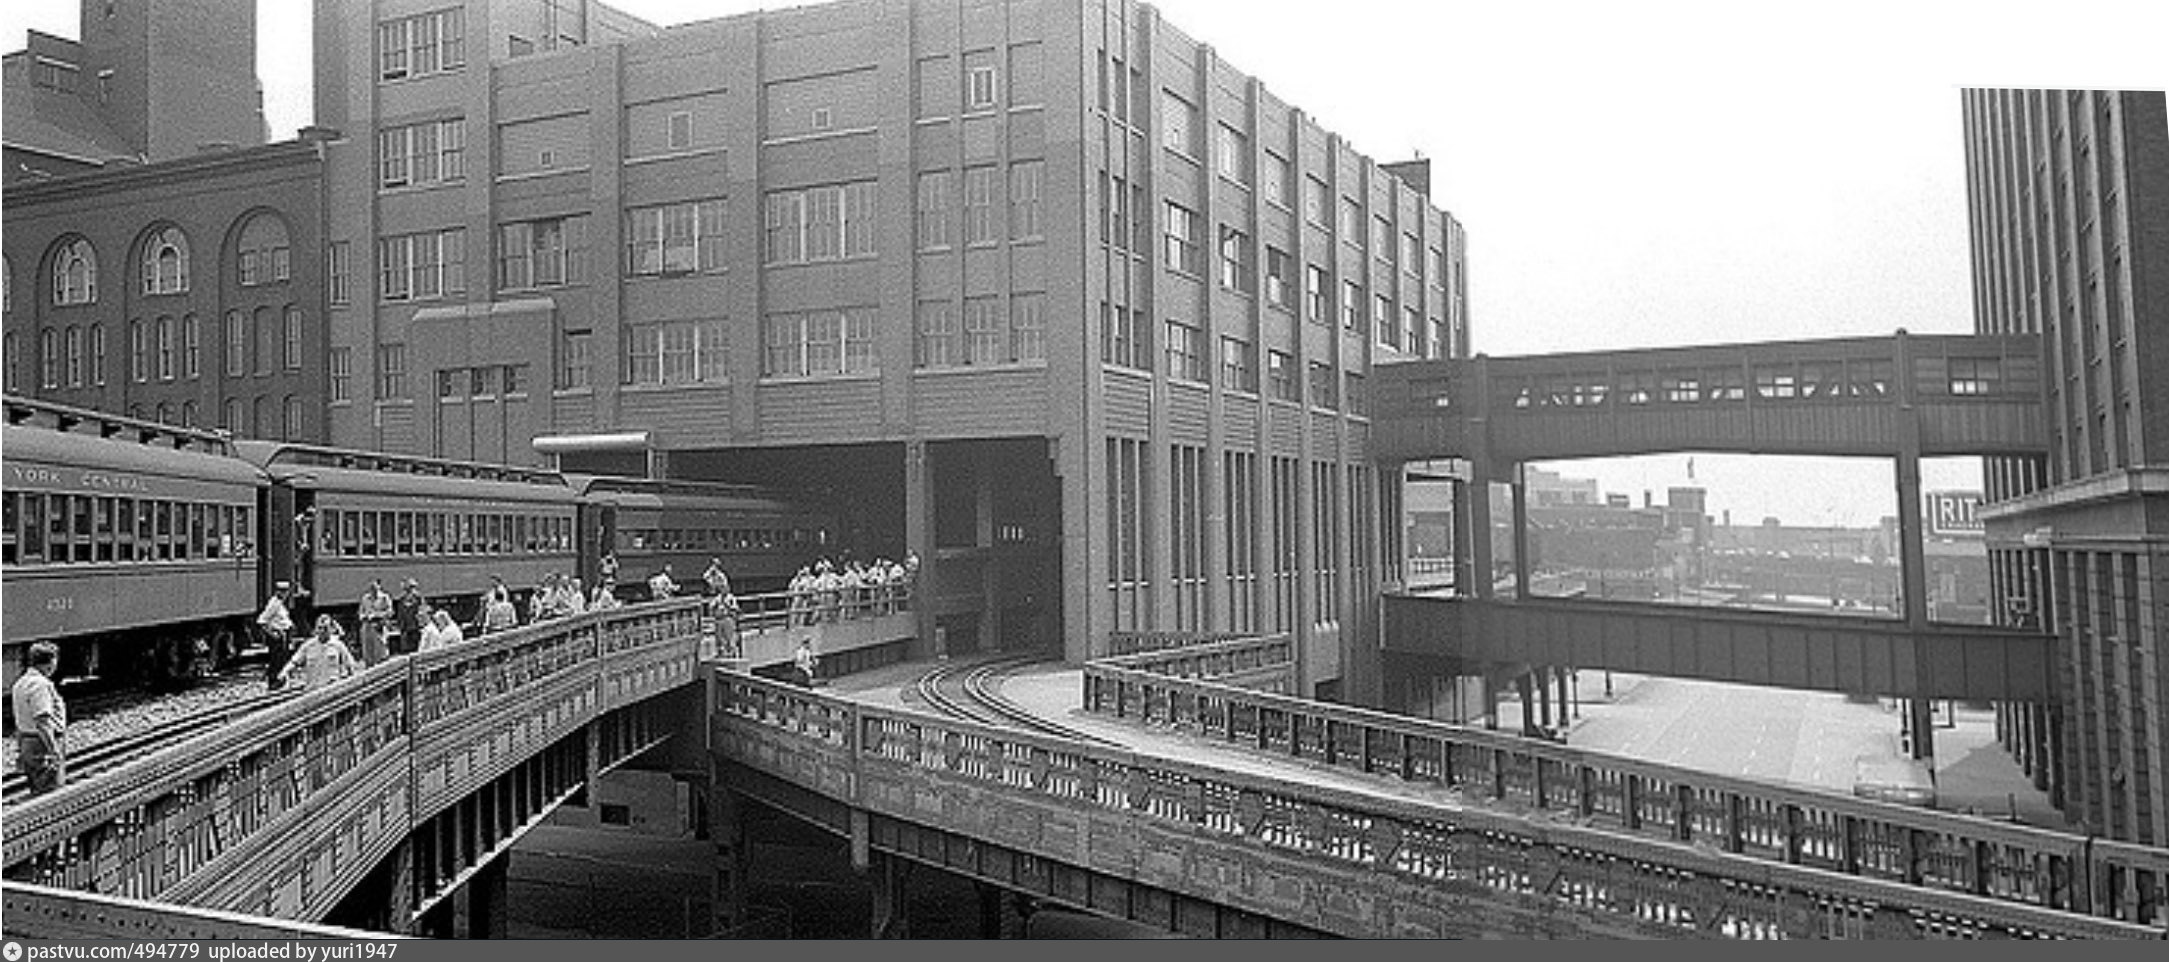 Building the new line. Парк Хай-лайн в Нью-Йорке. Надземное метро Нью-Йорка. Надземная железная дорога Нью-Йорка. Надземная железная дорога Нью Йорк 1930.